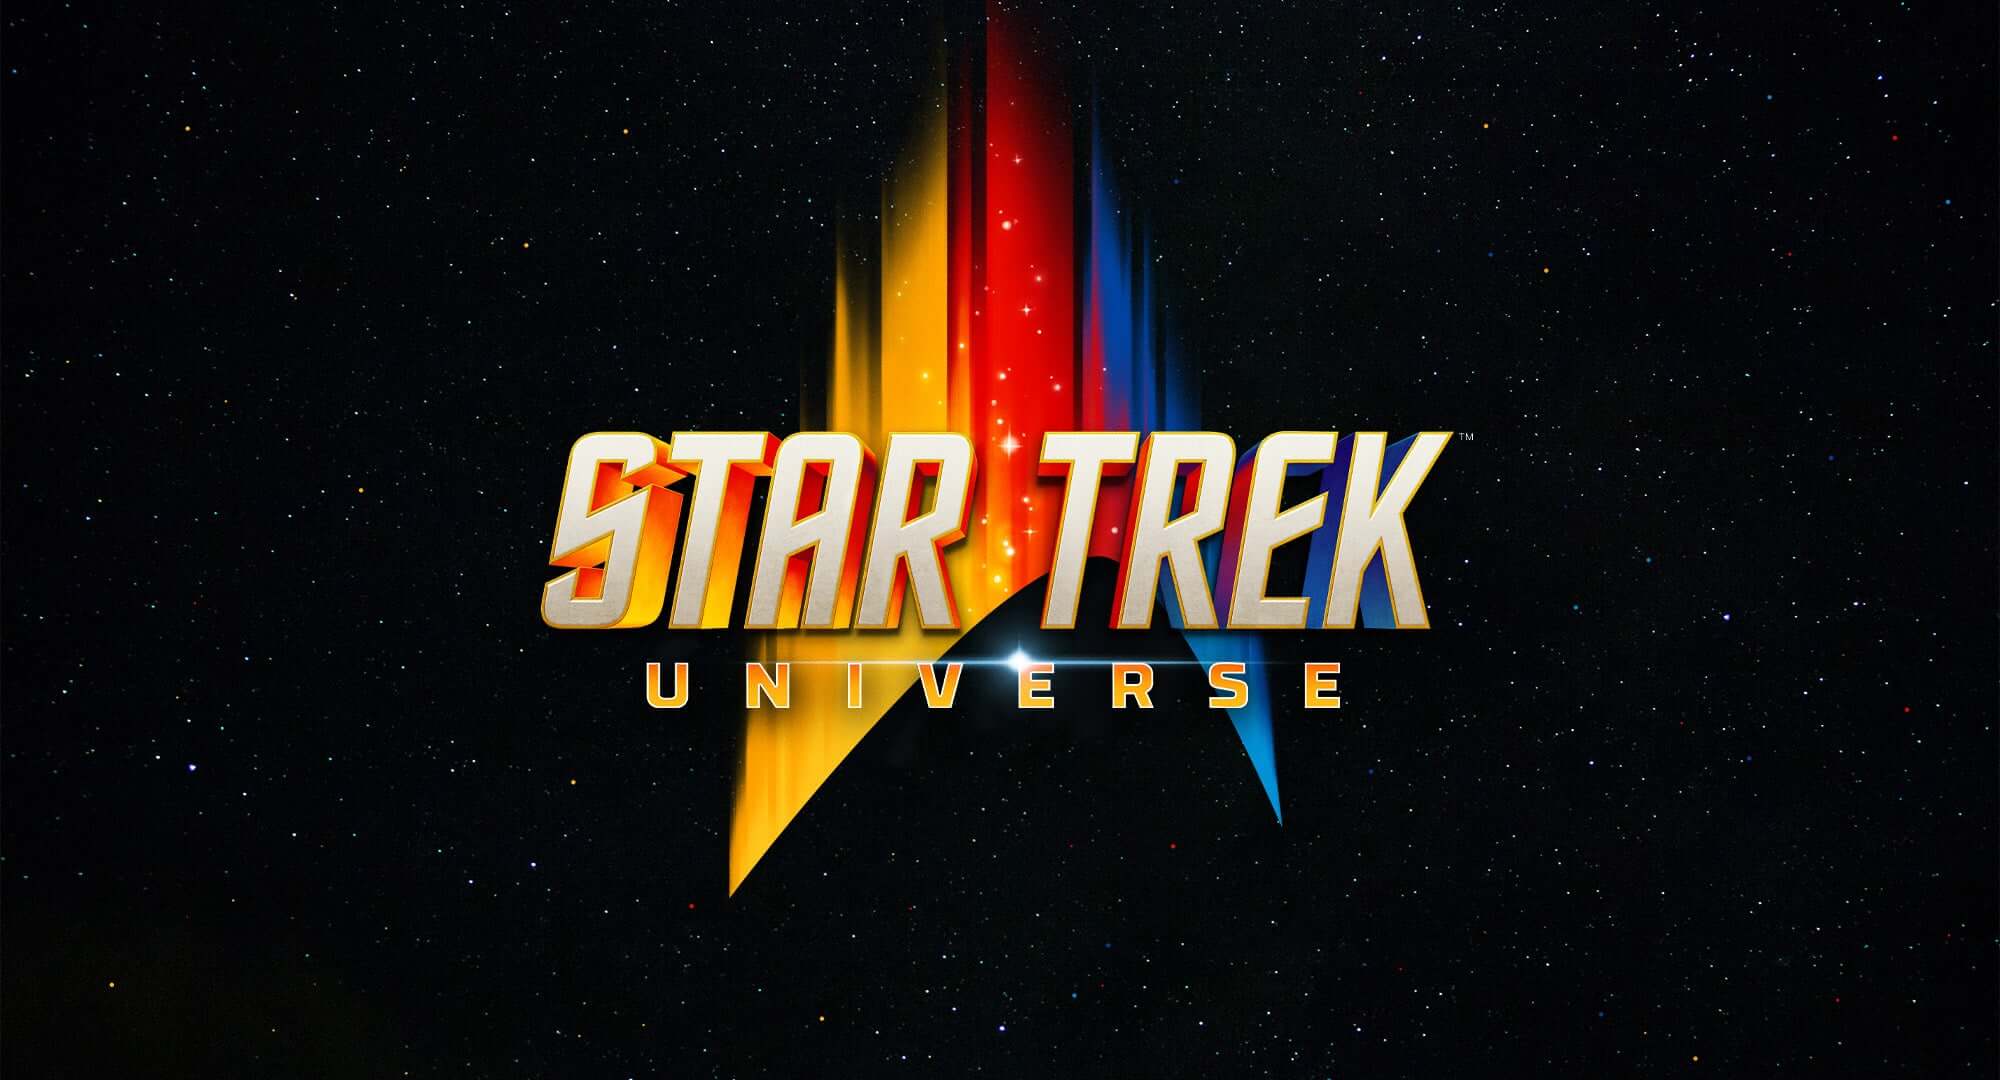 Star Trek universe adds Starfleet Academy to upcoming slate